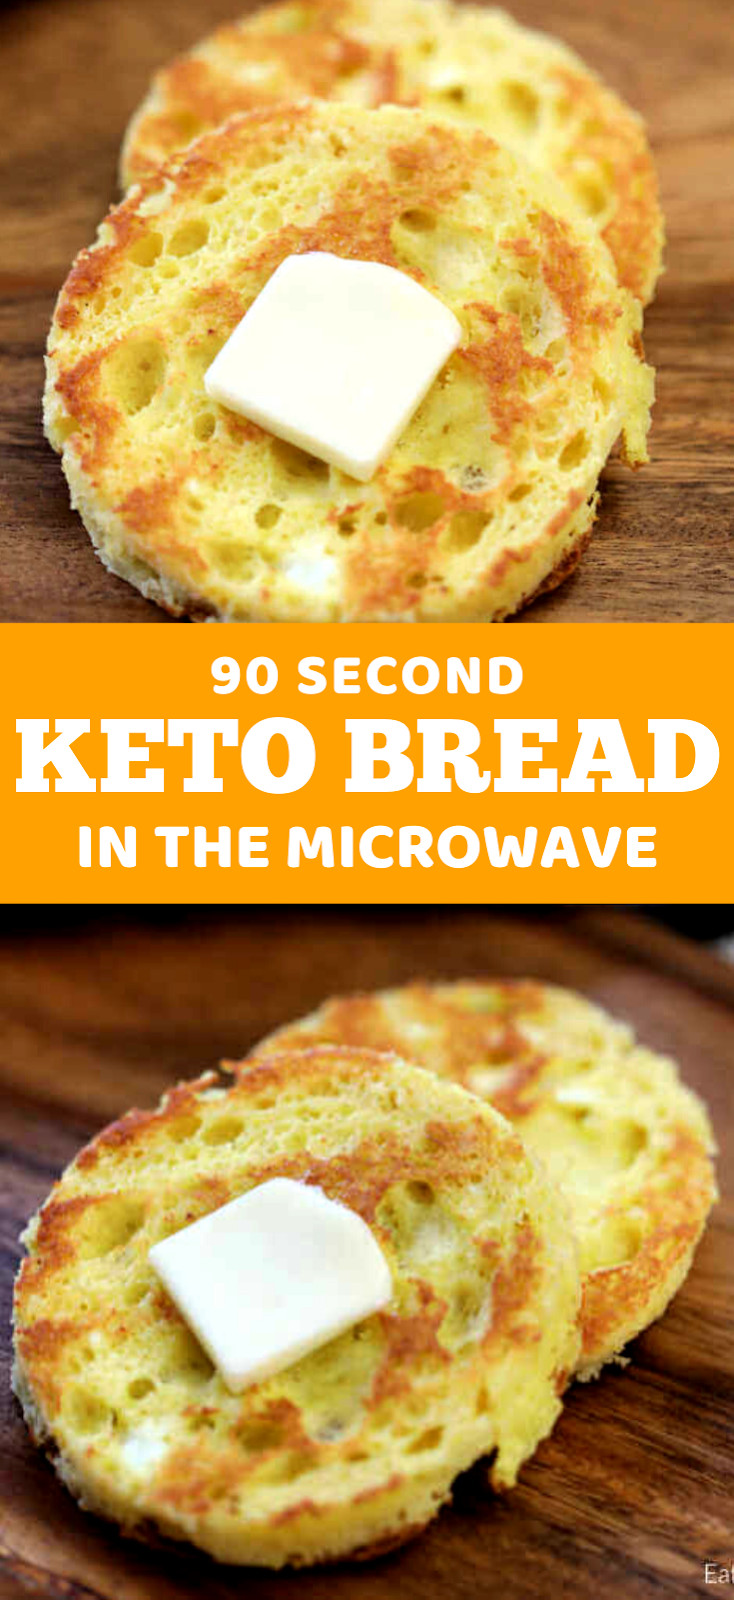 3 Ingredient 90 Second Keto Bread
 The Best 90 Second Keto Bread Recipe